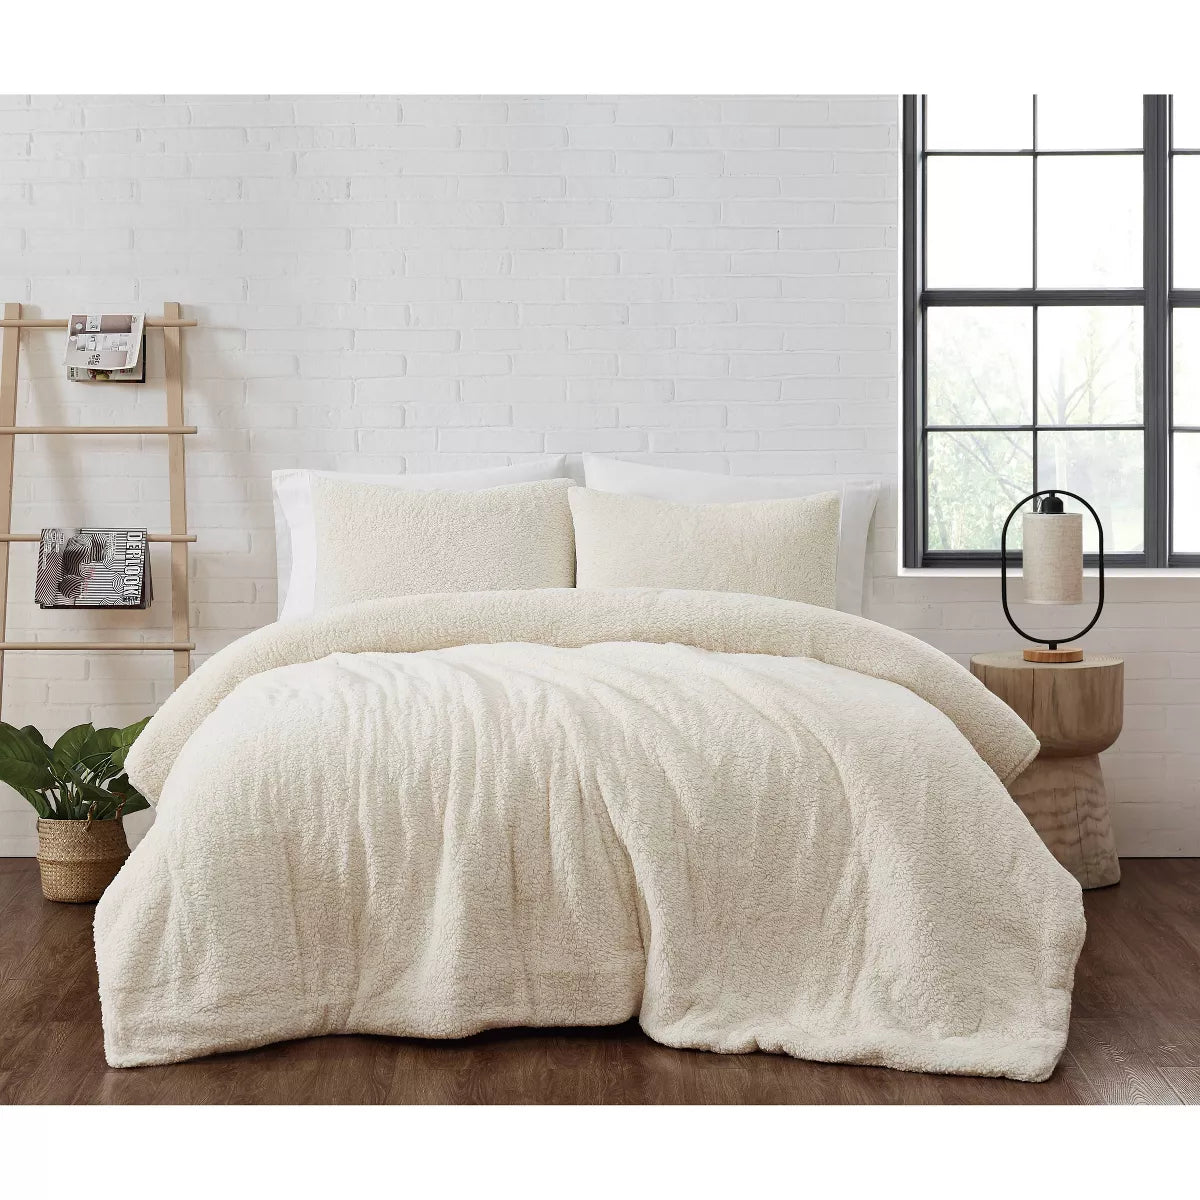 Brooklyn Loom Marshmallow Sherpa Comforter Set Ivory (King)